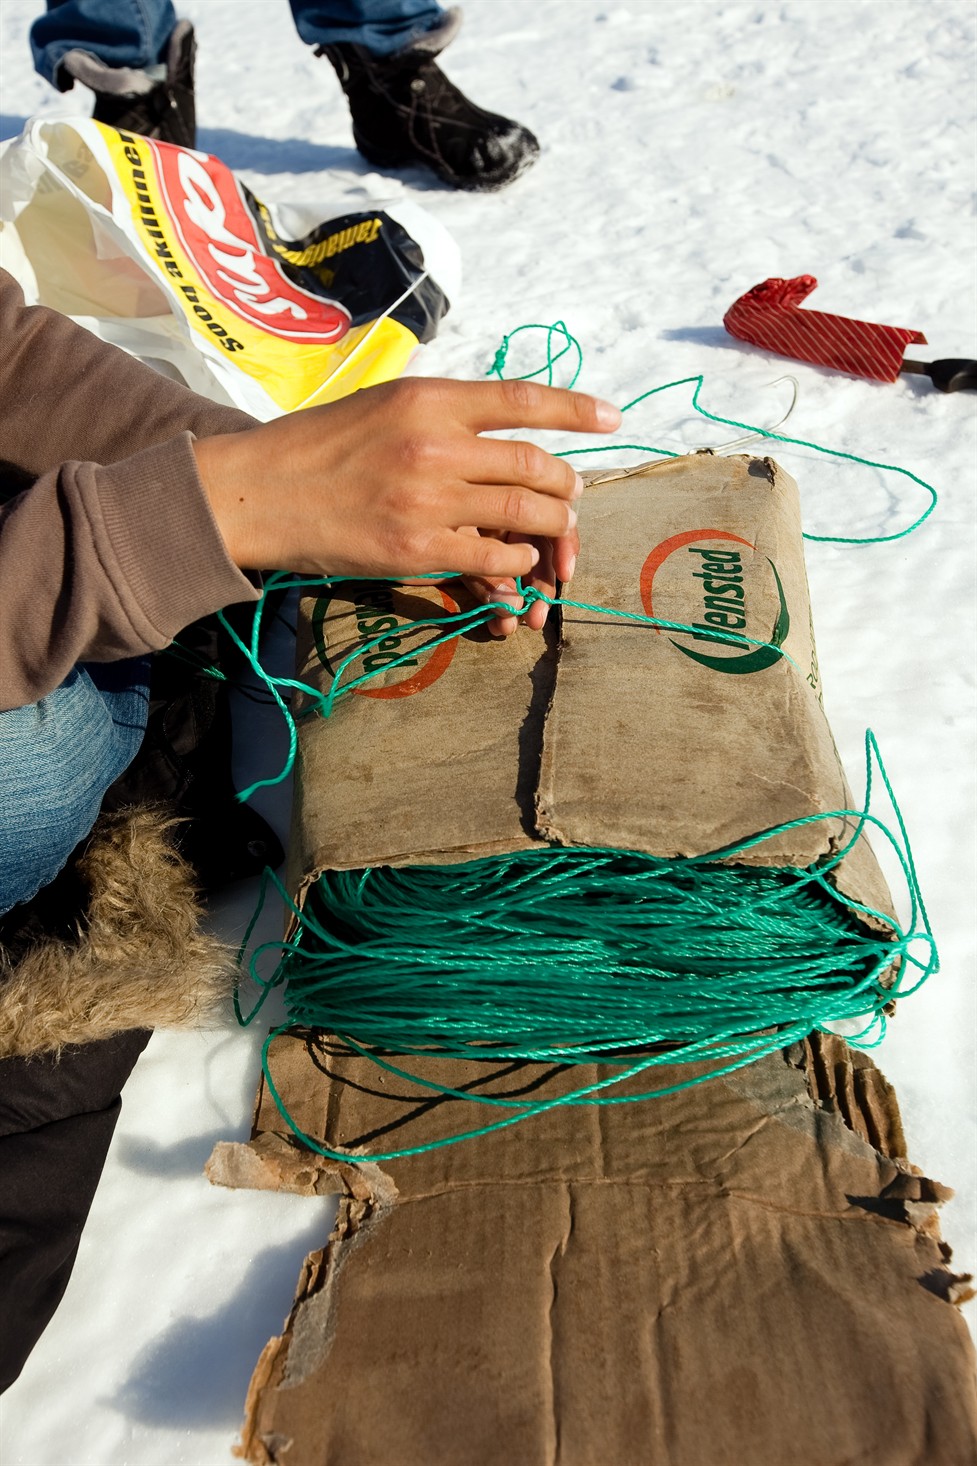 Preparations for ice fishing in Uummannaq, Greenland